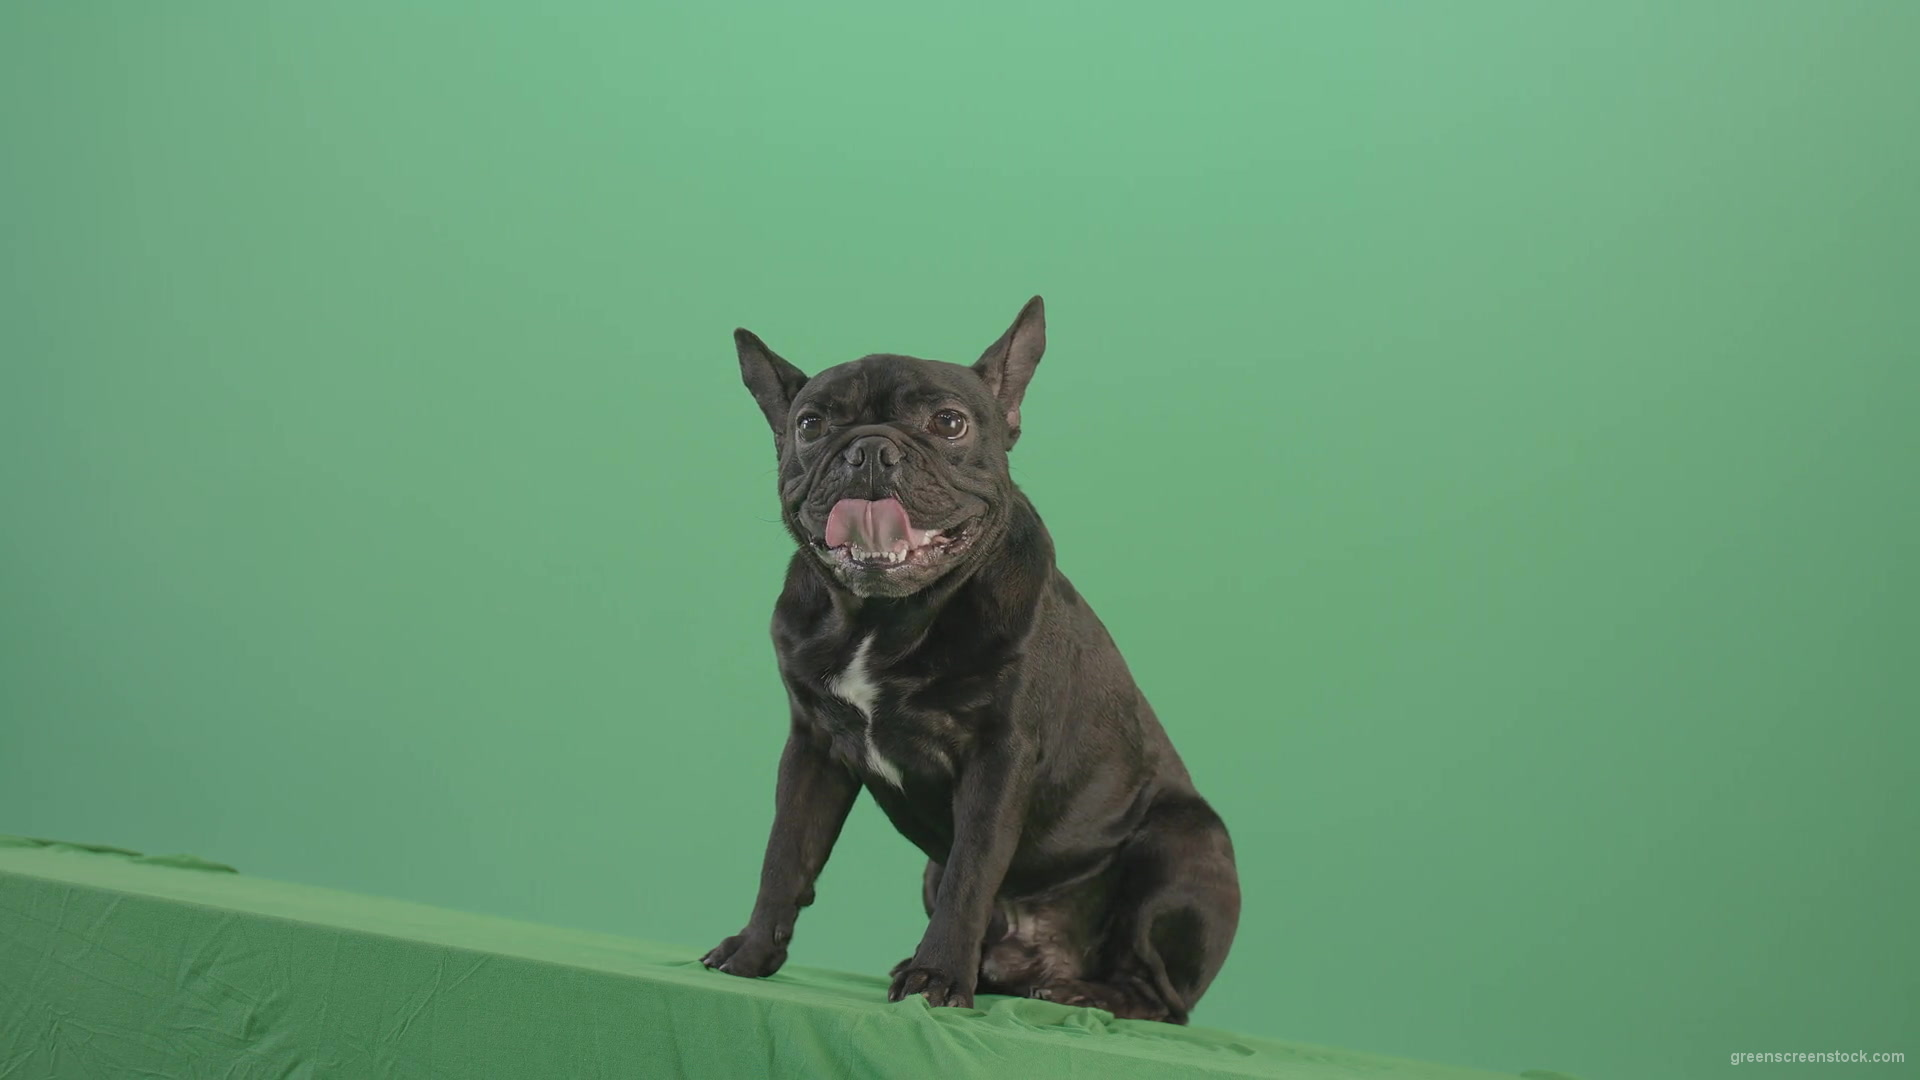 Lazy-french-bulldog-animal-dog-posing-on-green-screen-4K-Video-Footage-1920_008 Green Screen Stock